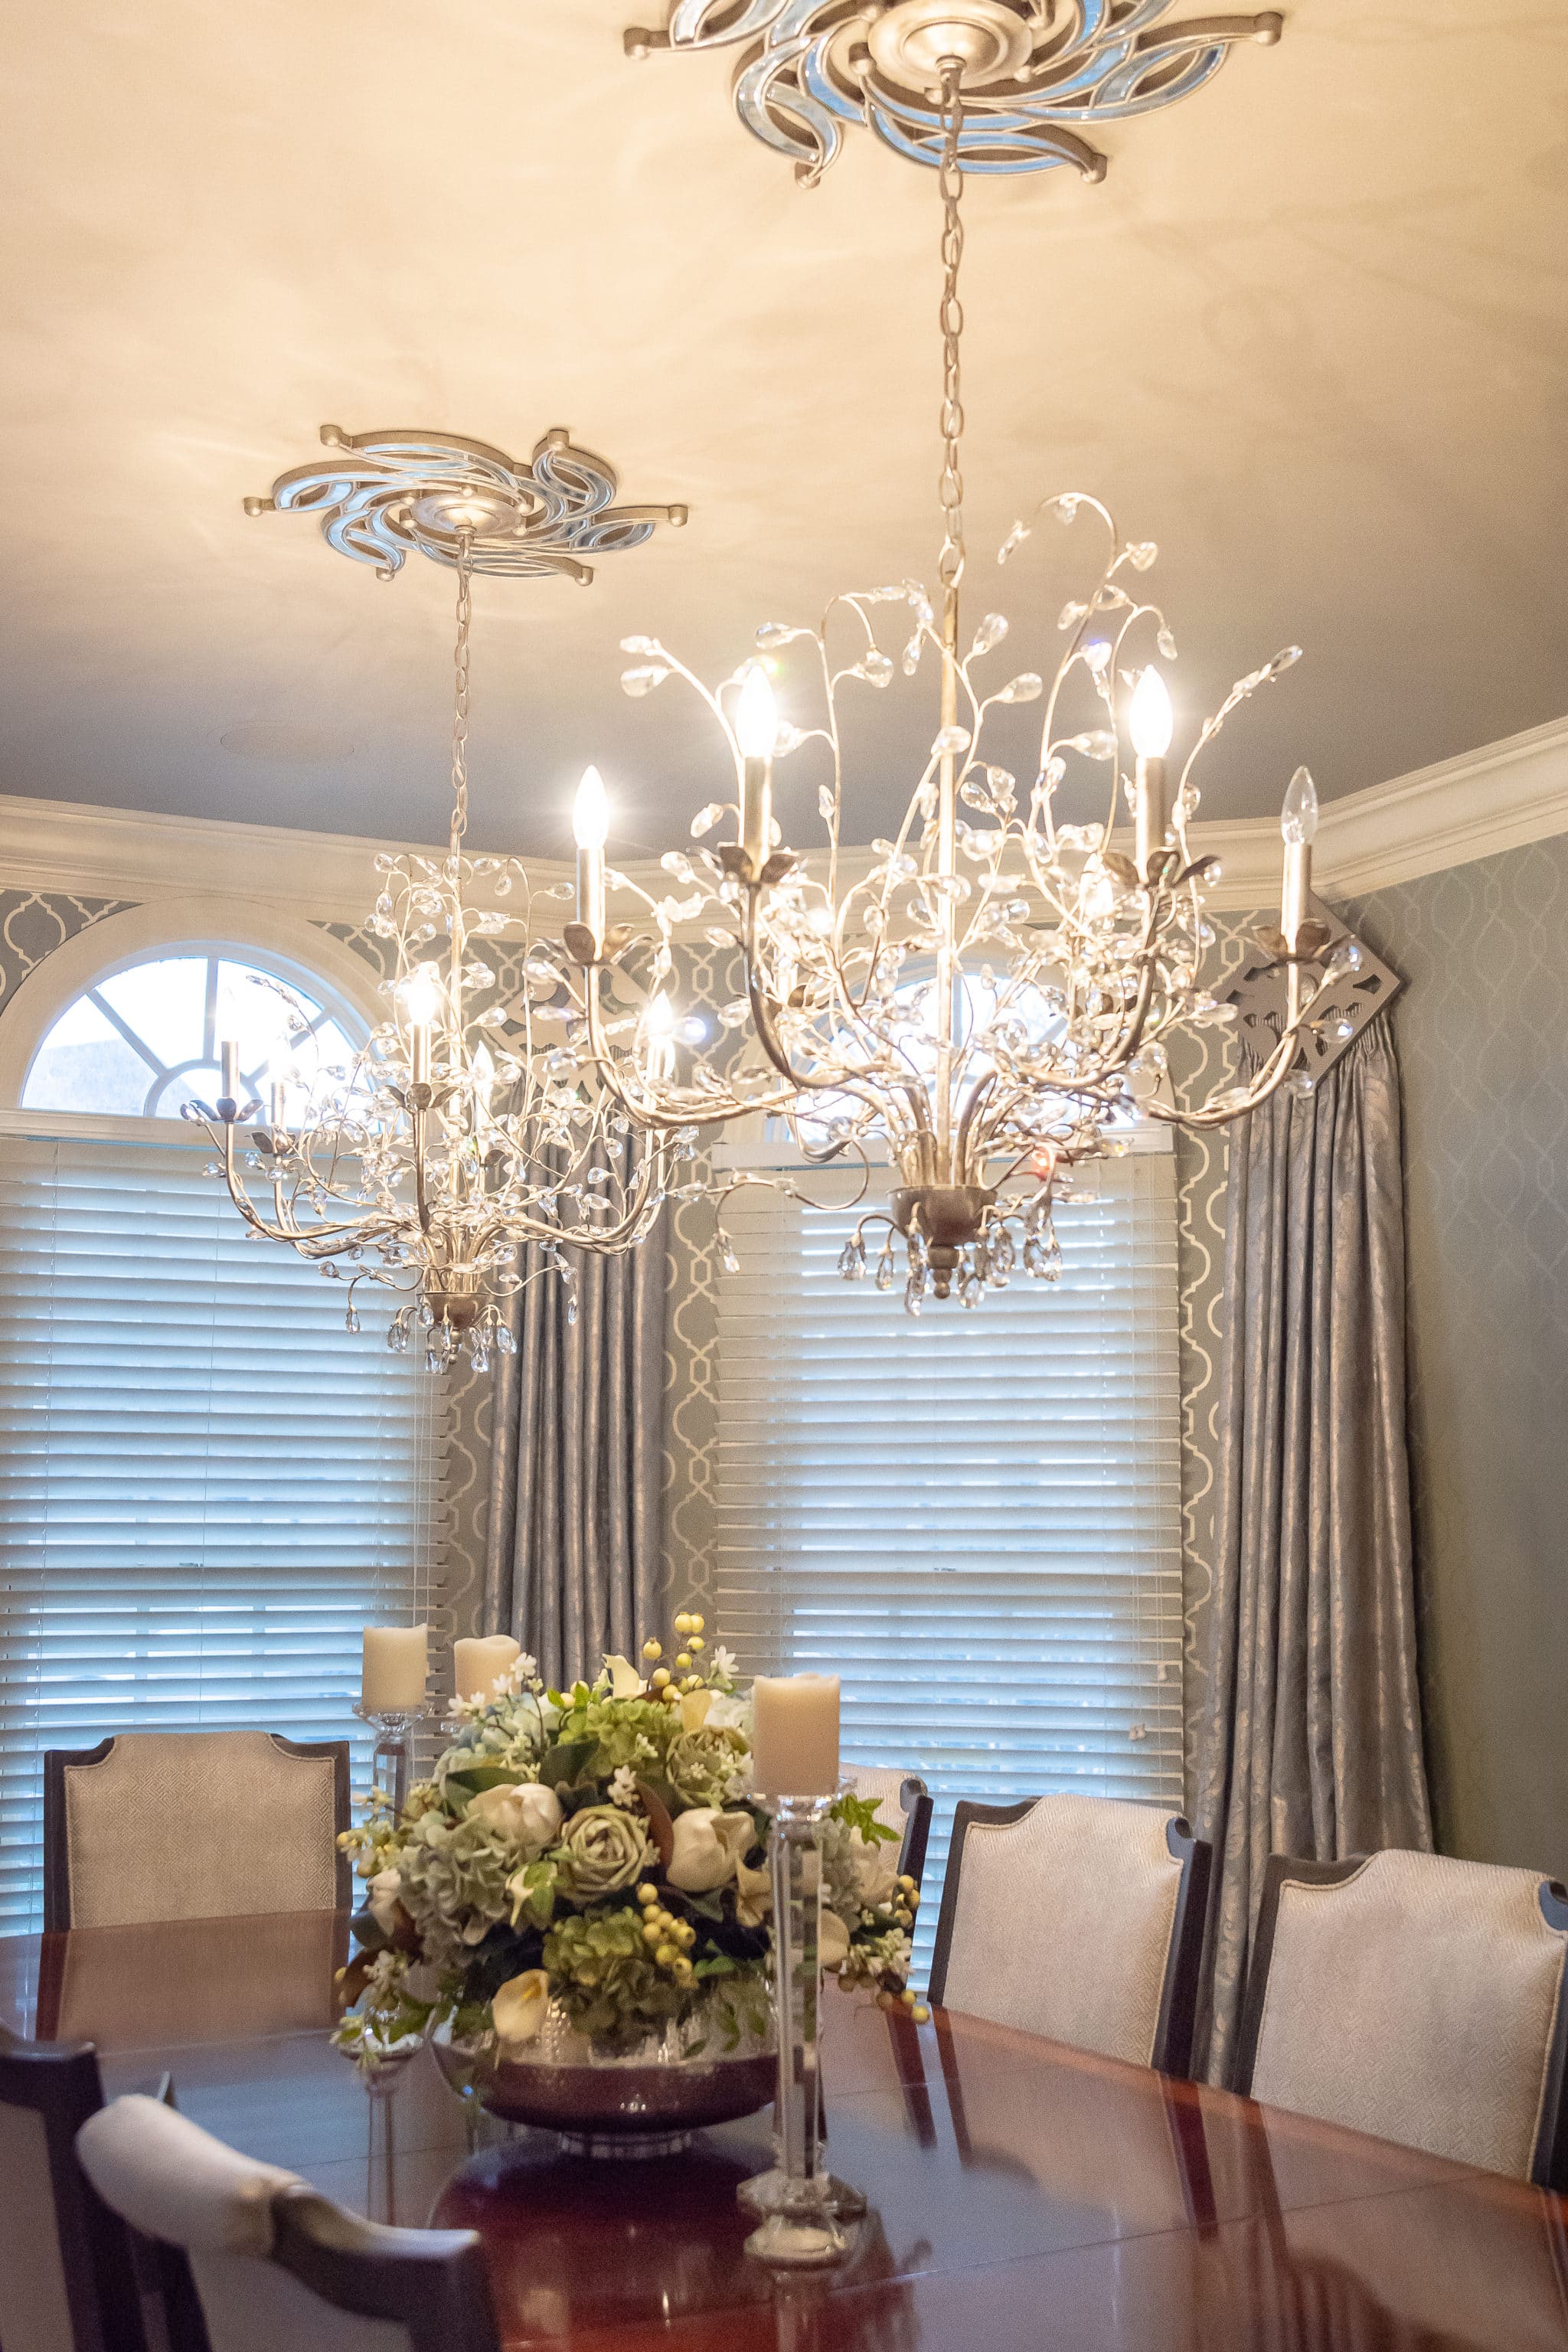 chandeliers in formal dining room